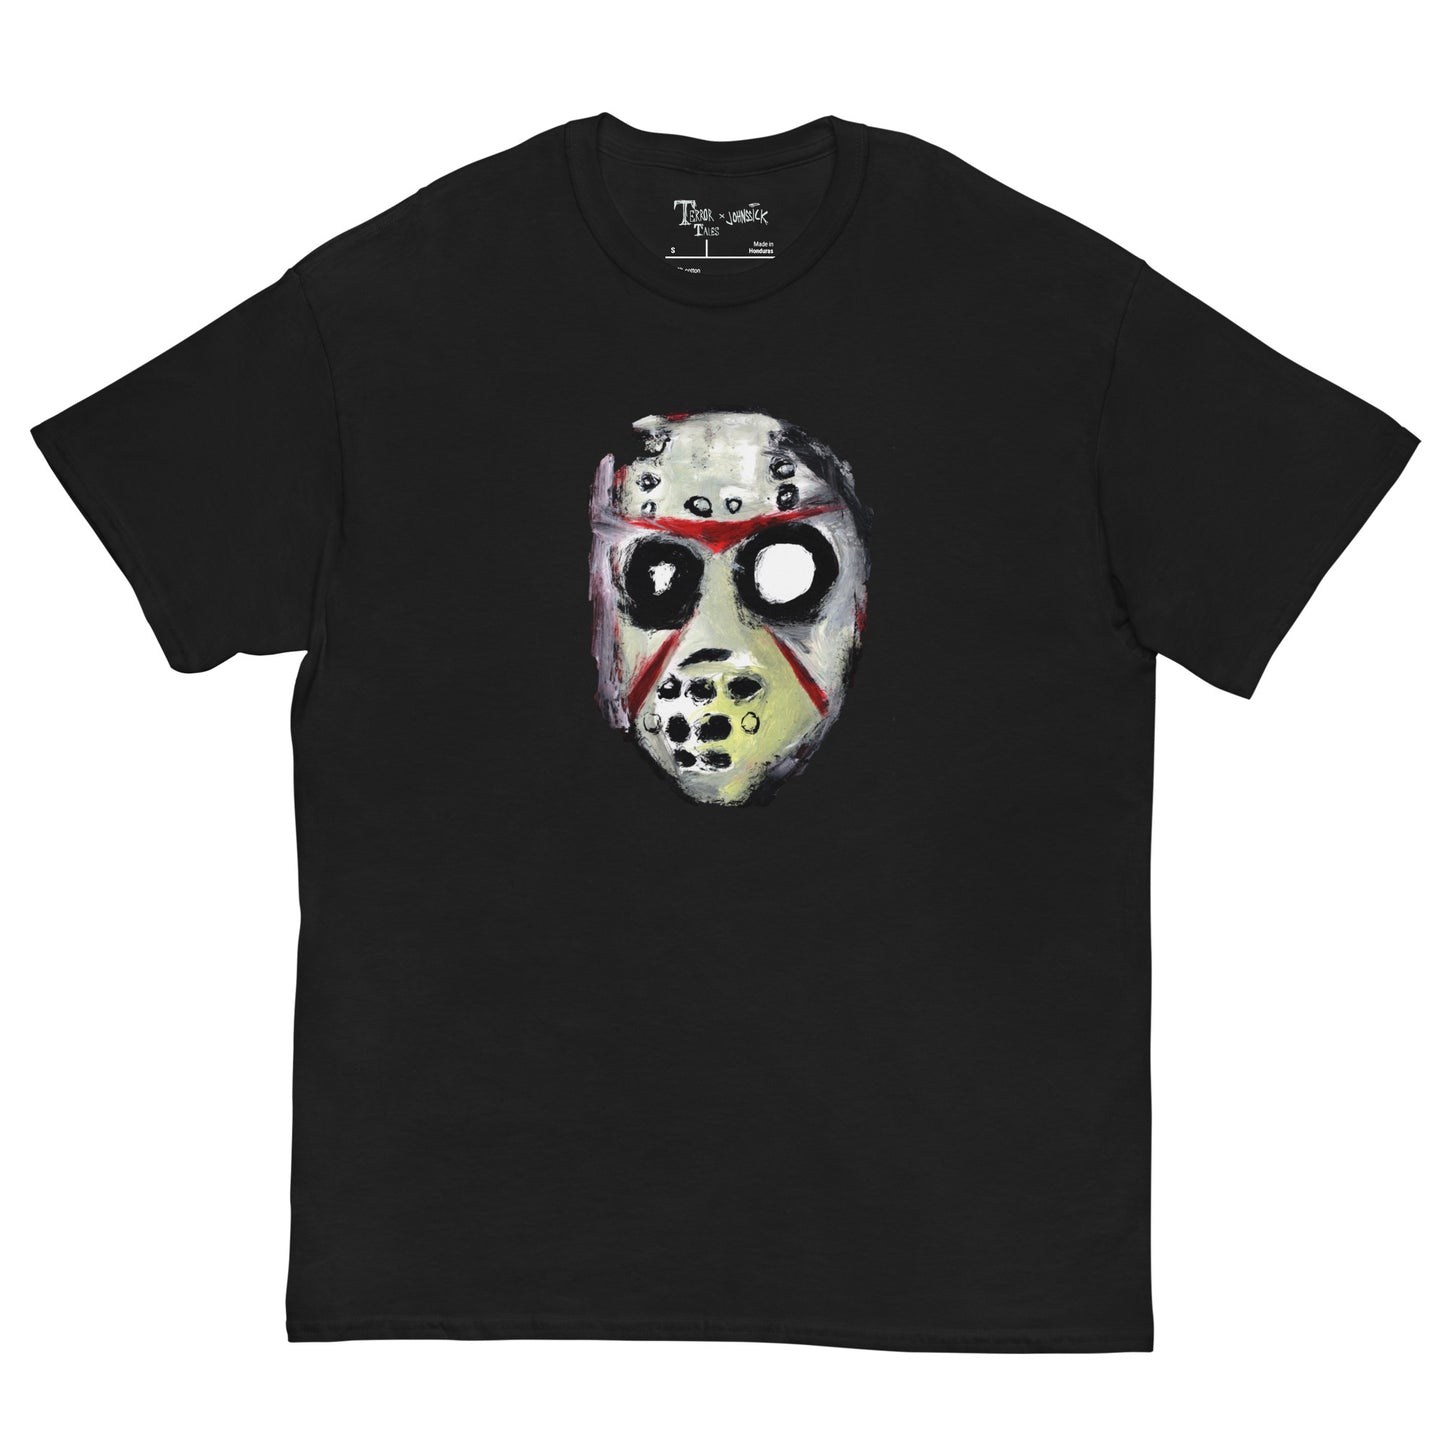 JOHNSSICK x TERROR TALES Jason T-shirt